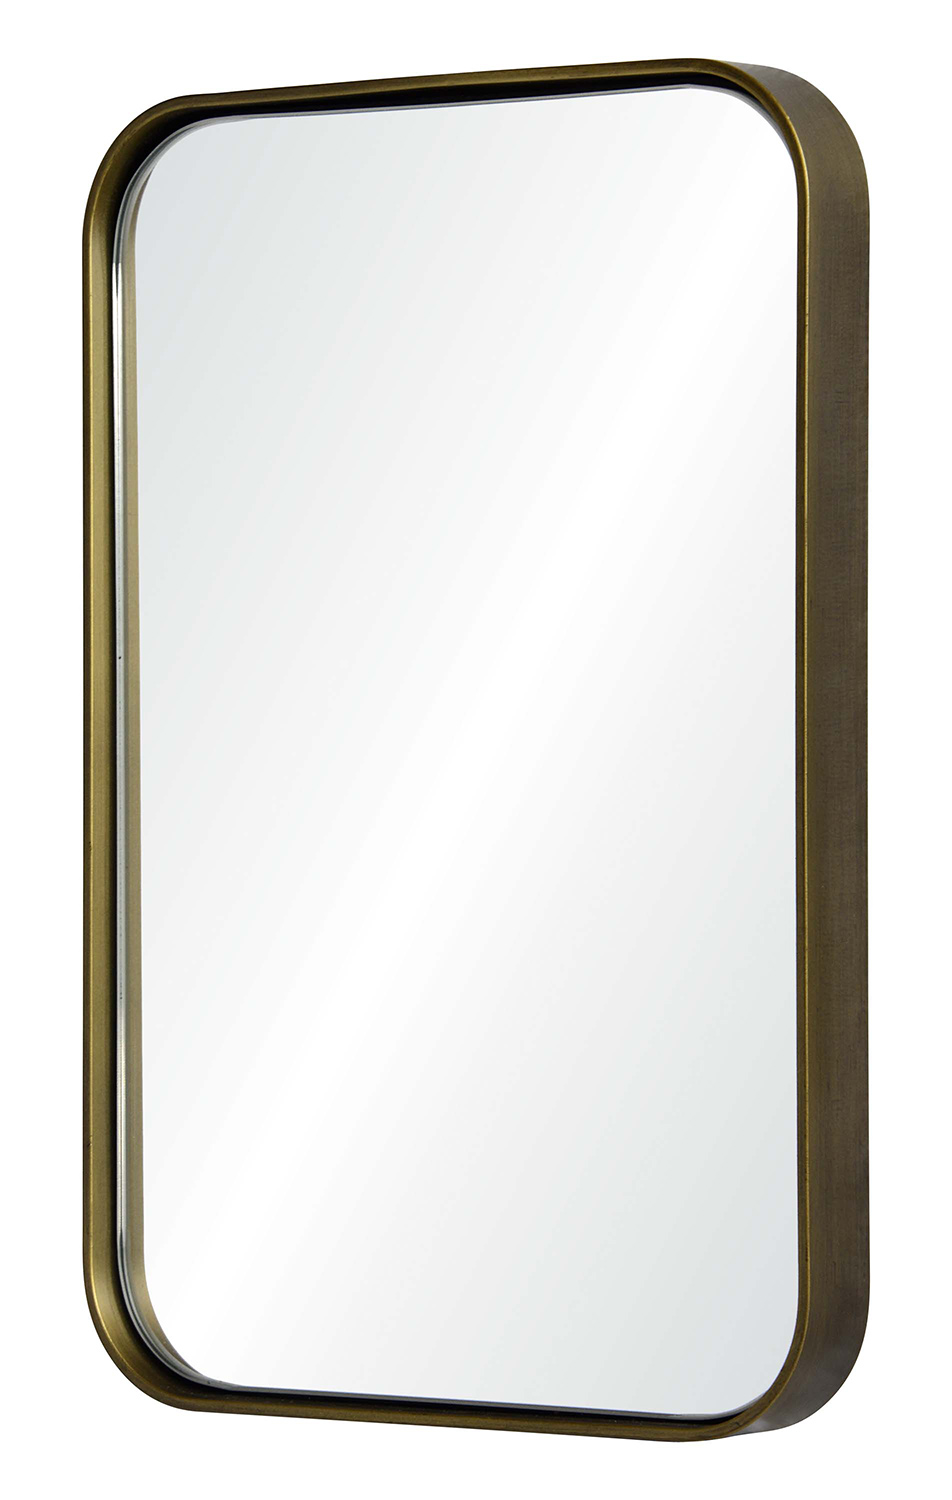 Ren-Wil Ollie Rectangular Mirror - Medium Bronze Painted